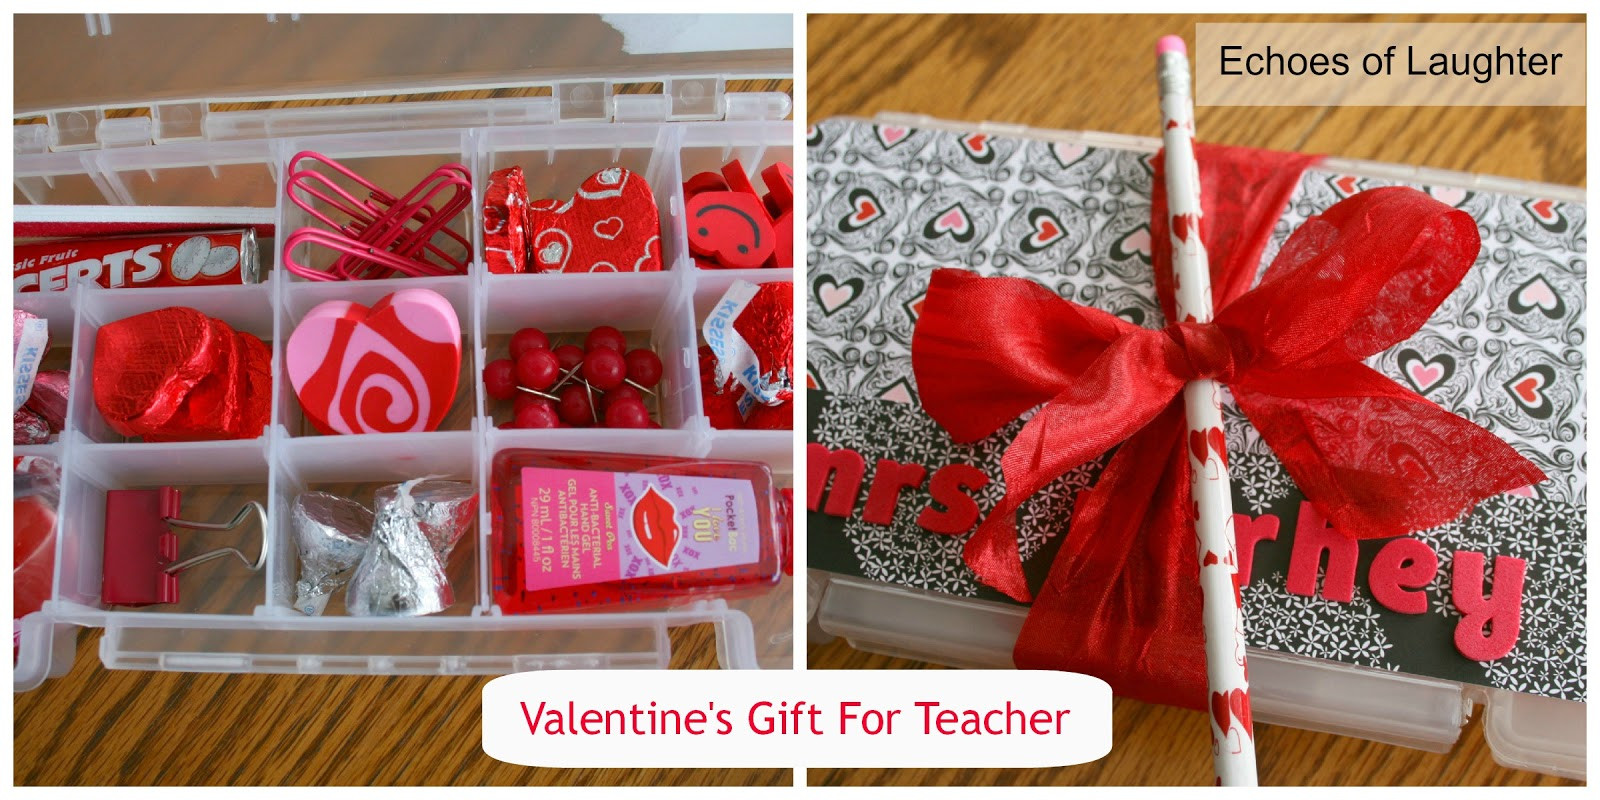 Teacher Valentine'S Day Gift Ideas
 10 Inspiring Valentine s Ideas Echoes of Laughter